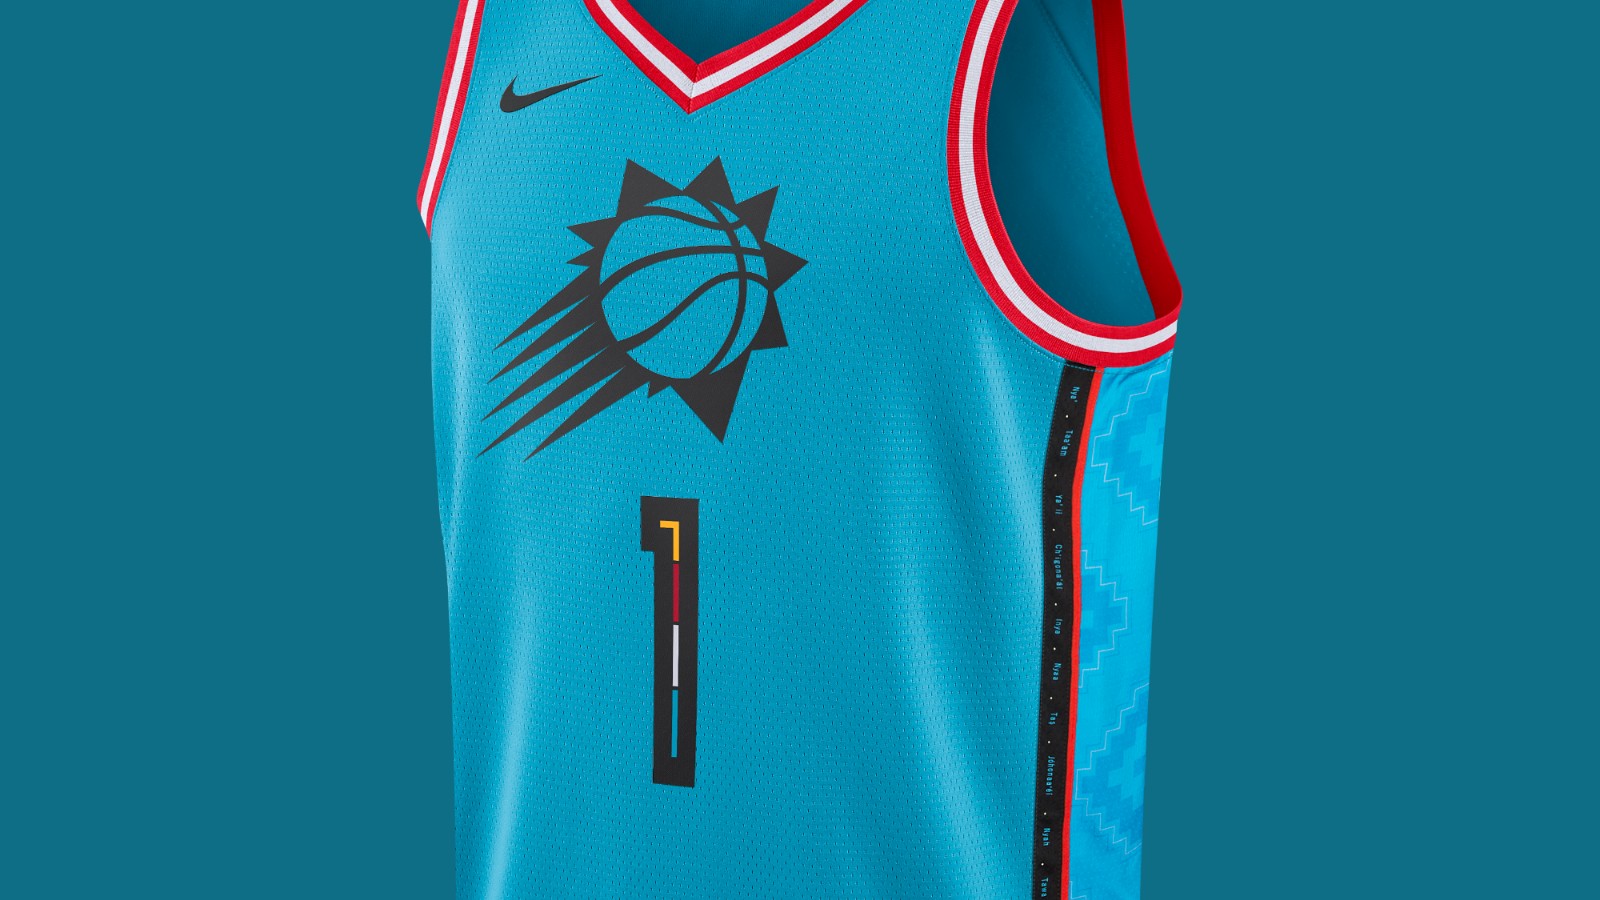 Potential Suns City Edition jersey leaks - Burn City Sports